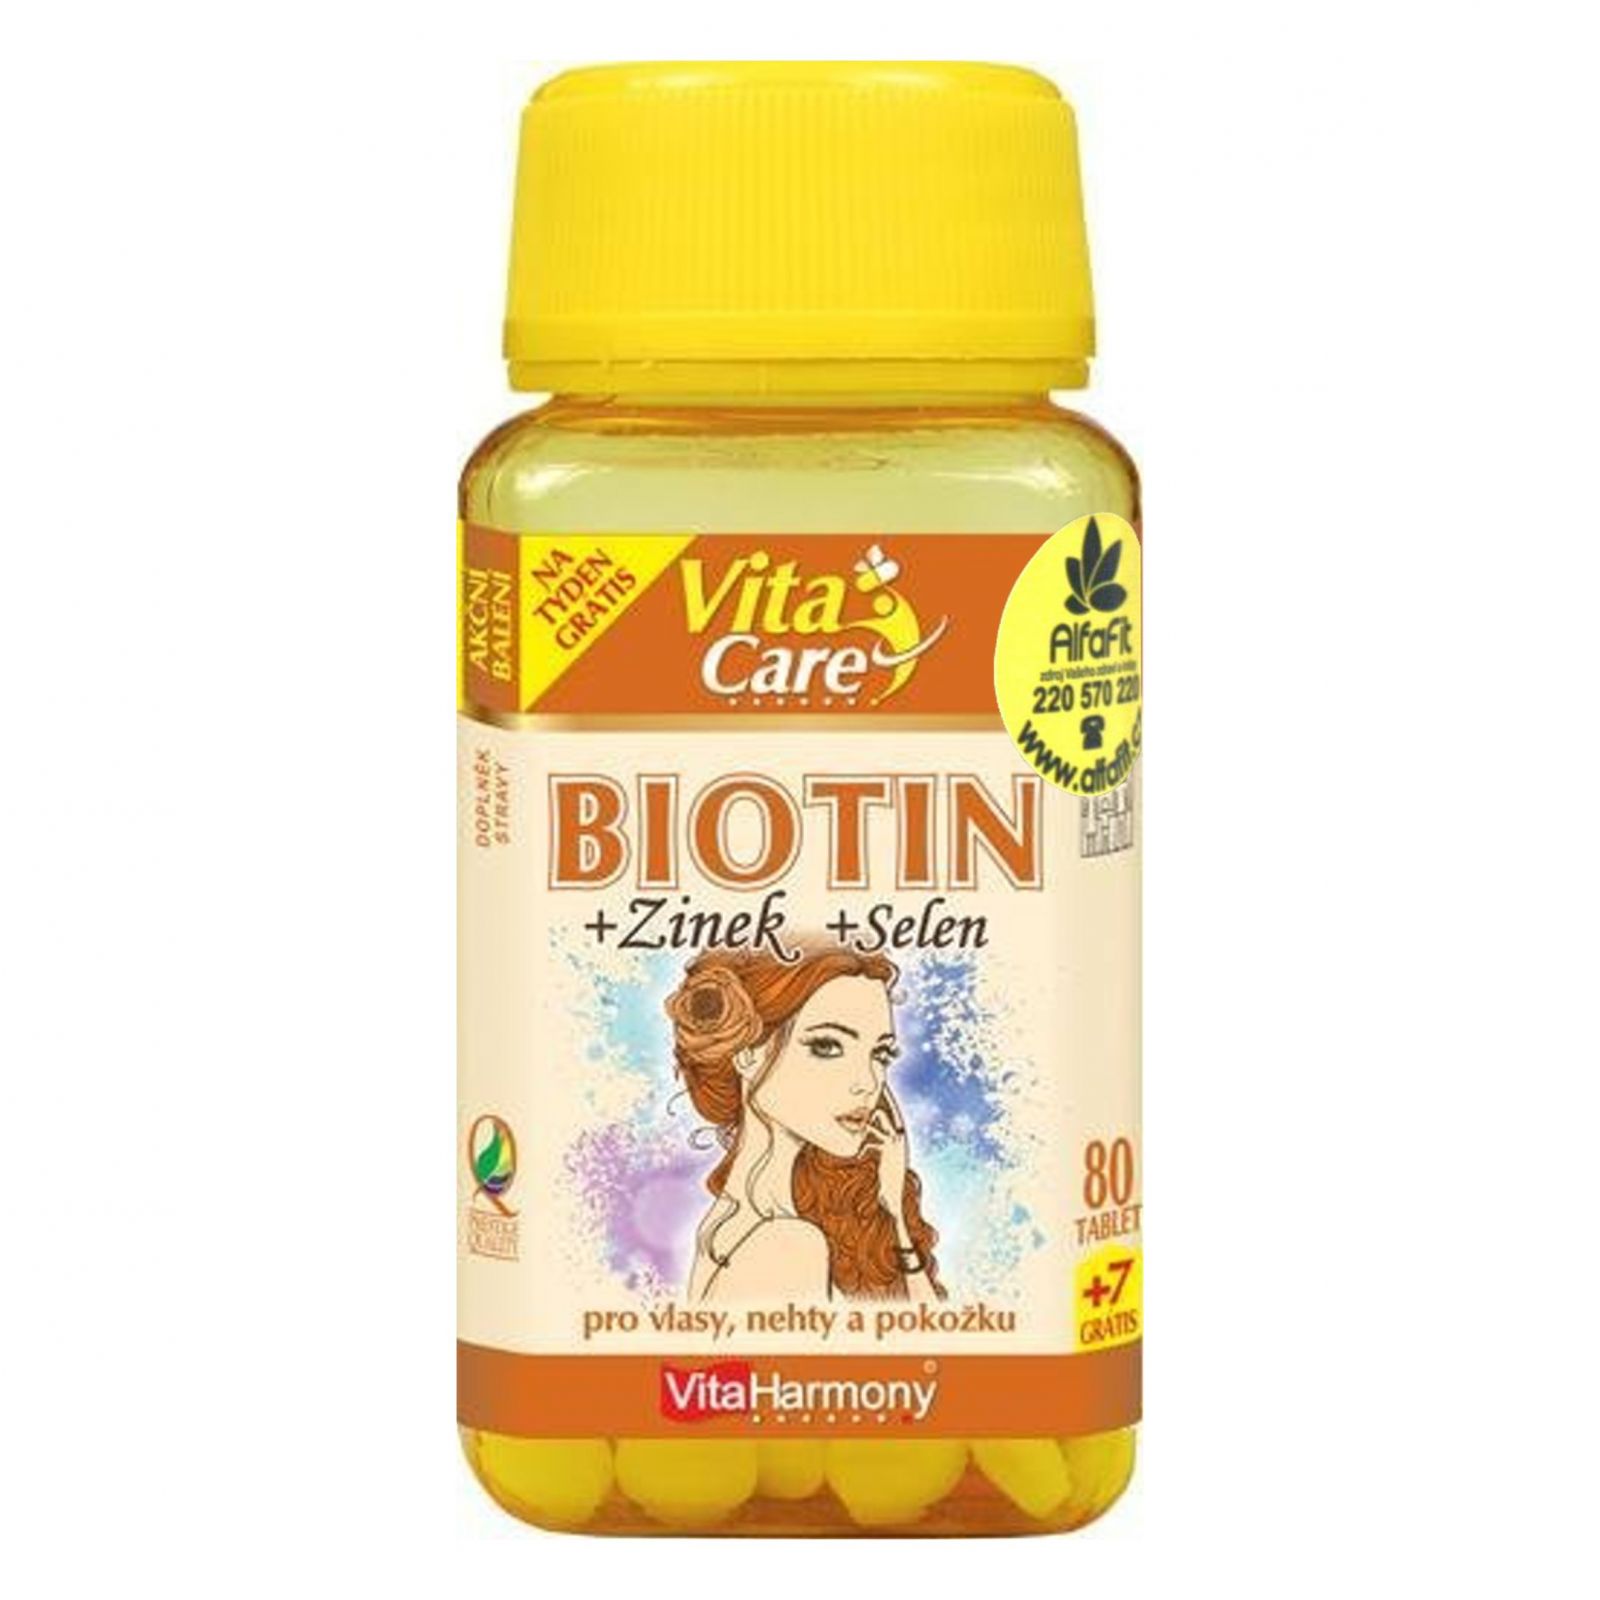 Селен детский. Биотин. Селен биотин витамины. Детские витамины с цинком и селеном. Биотин цинк витамины.